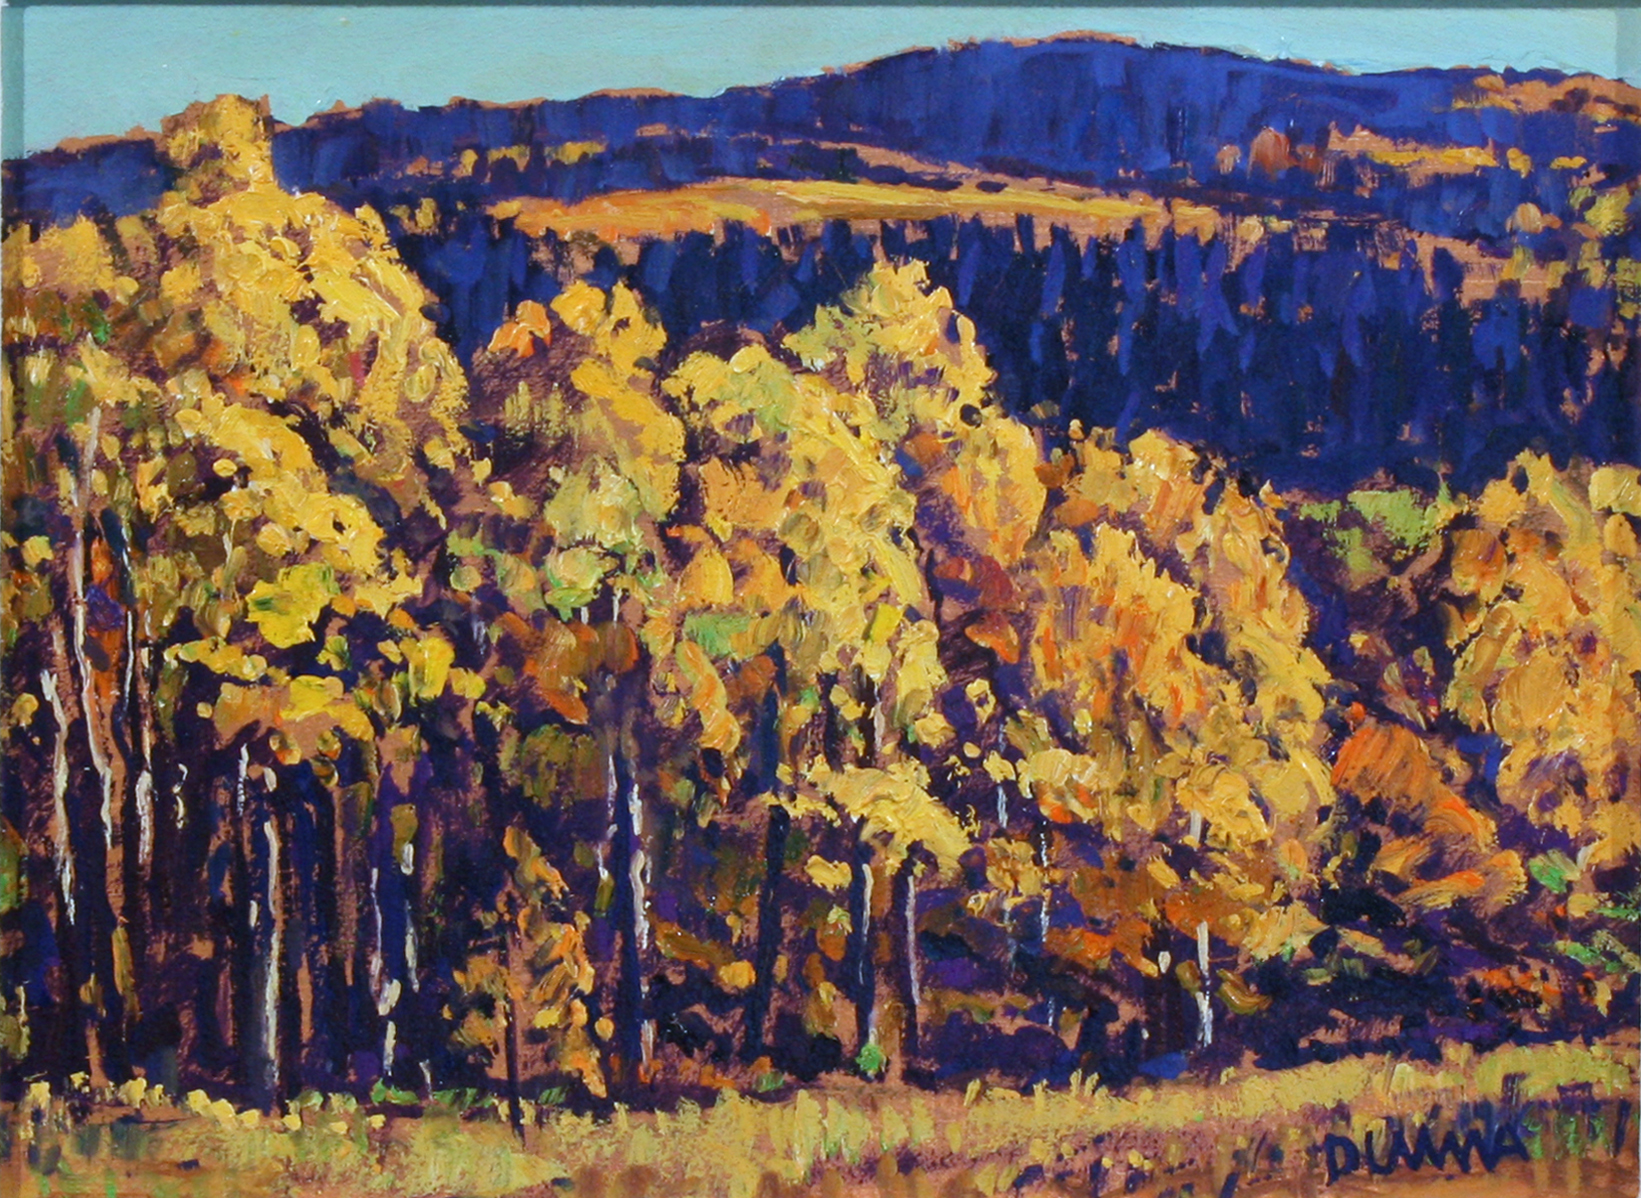 Alberta landscape, autumn, changing colours, Calgary artist, trees, aspens, bright